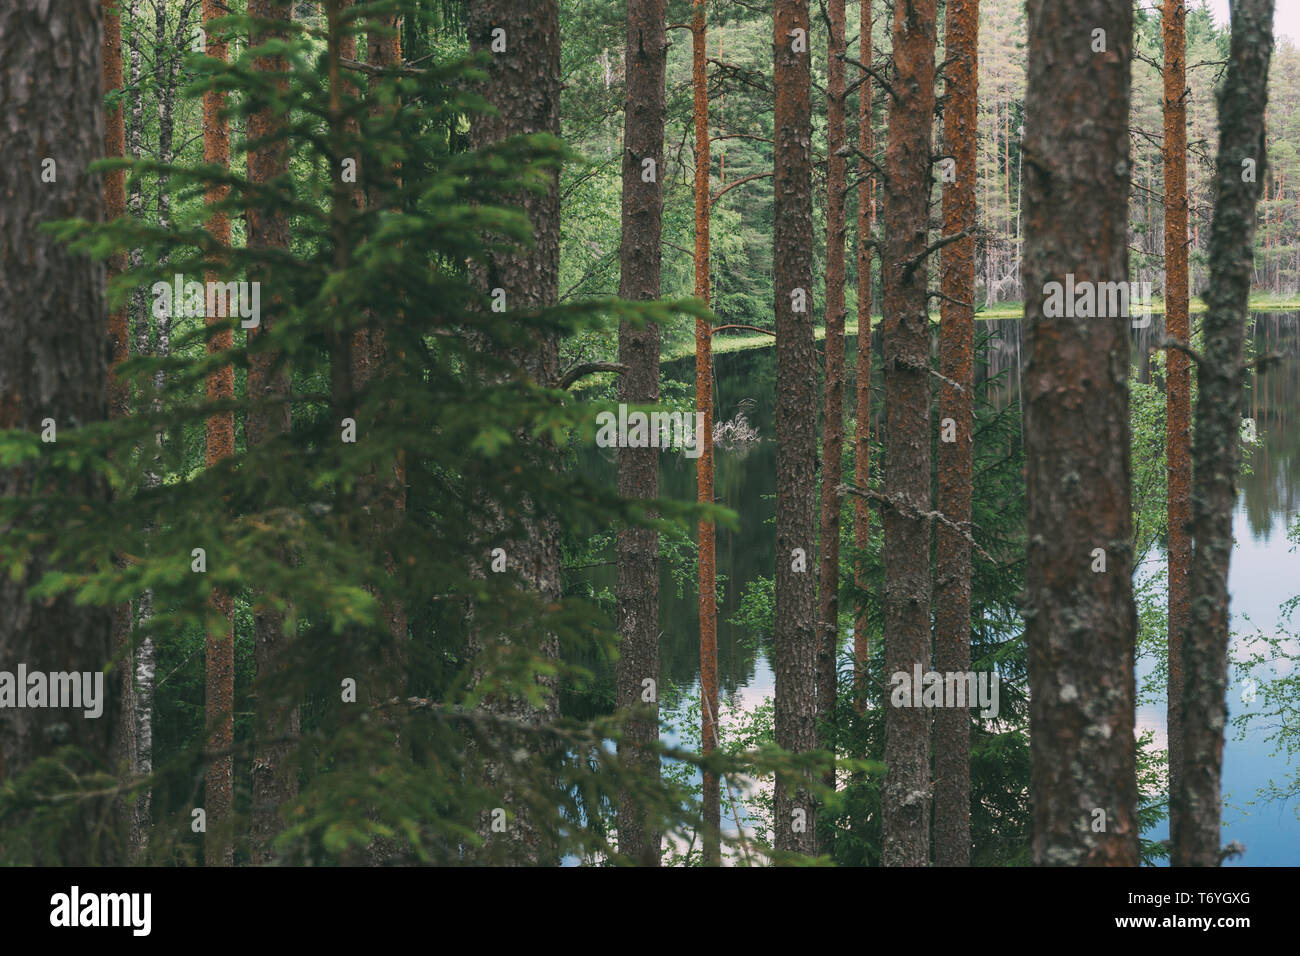 Vista al Lago a través de árboles de profundos bosques de coníferas, paisaje nórdico Foto de stock